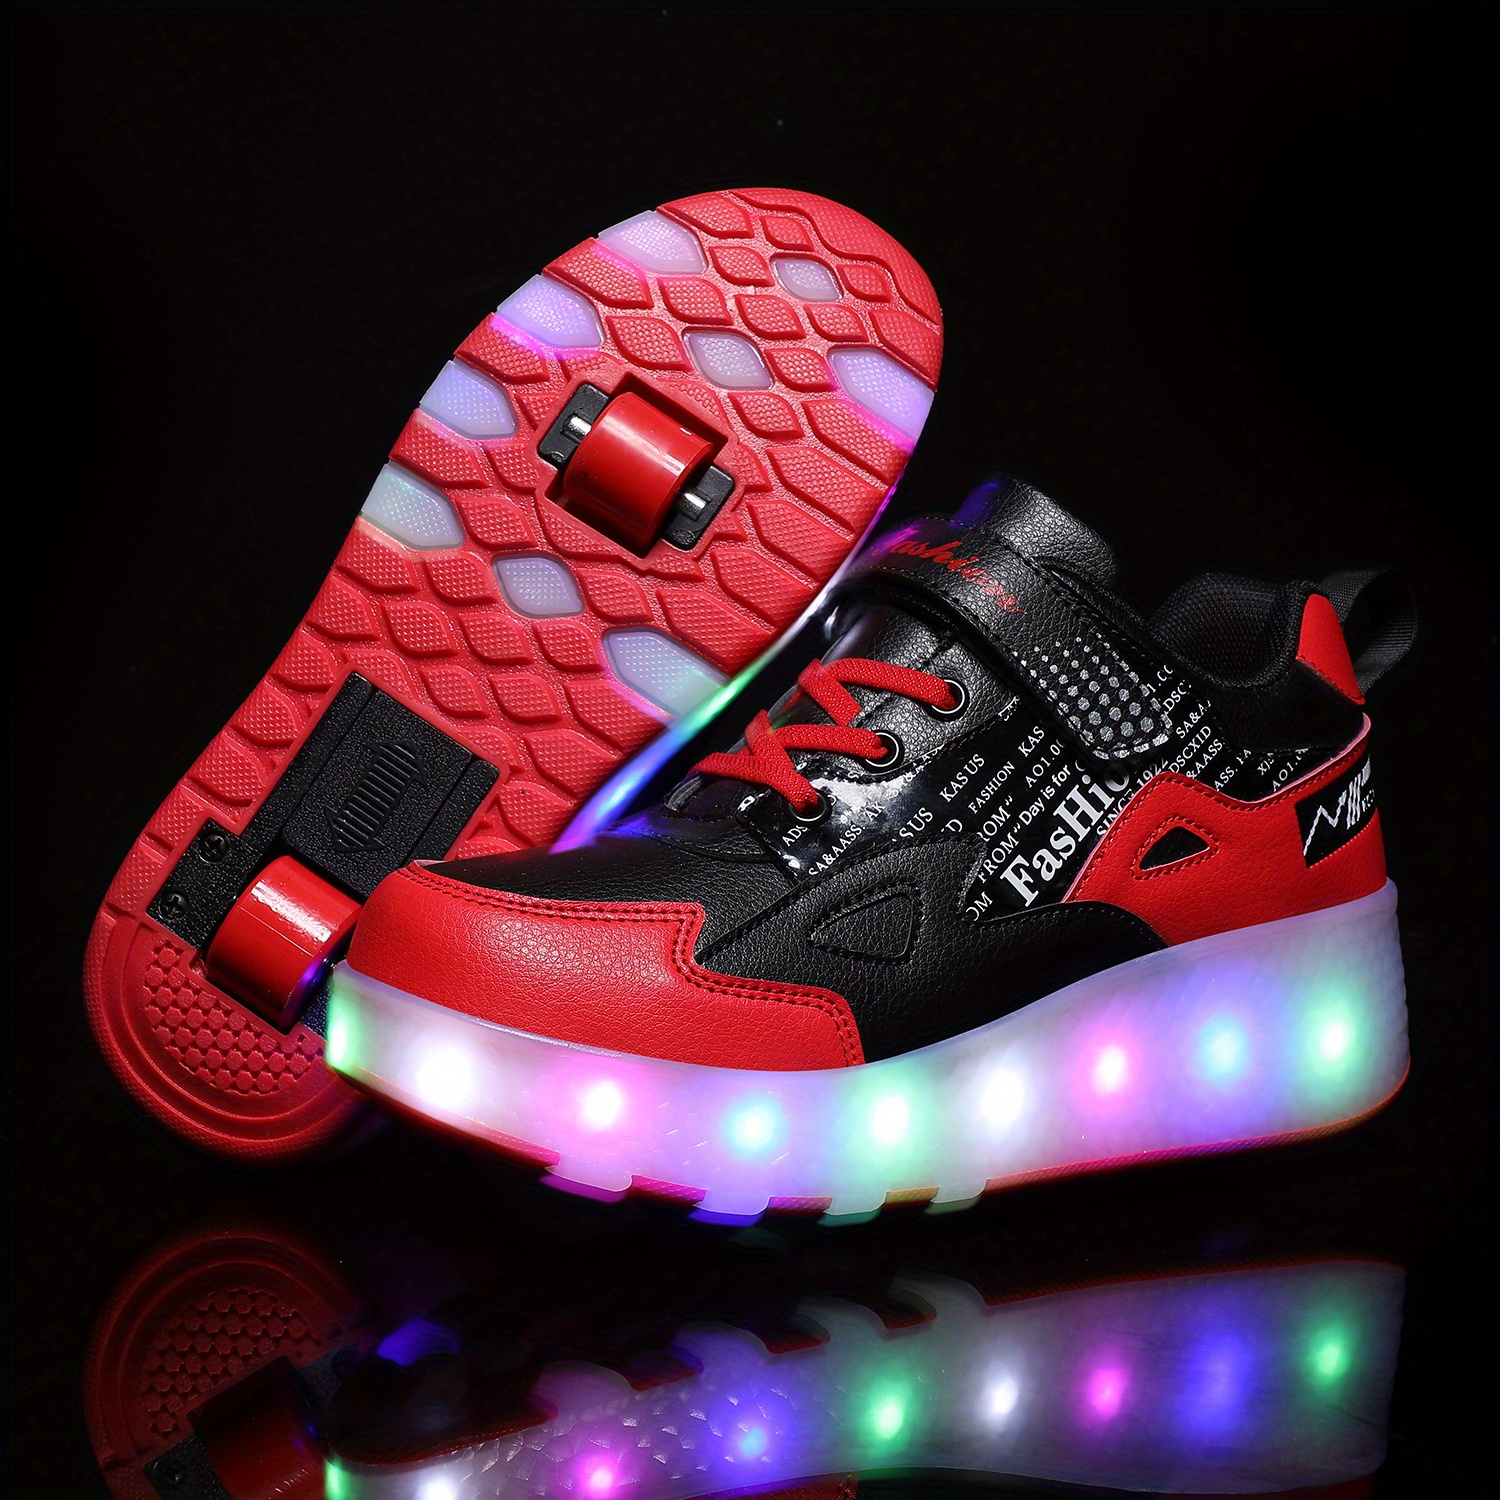 Top White Hight LED (Kid's) Skates Sneakers Roller by KixxSneakers